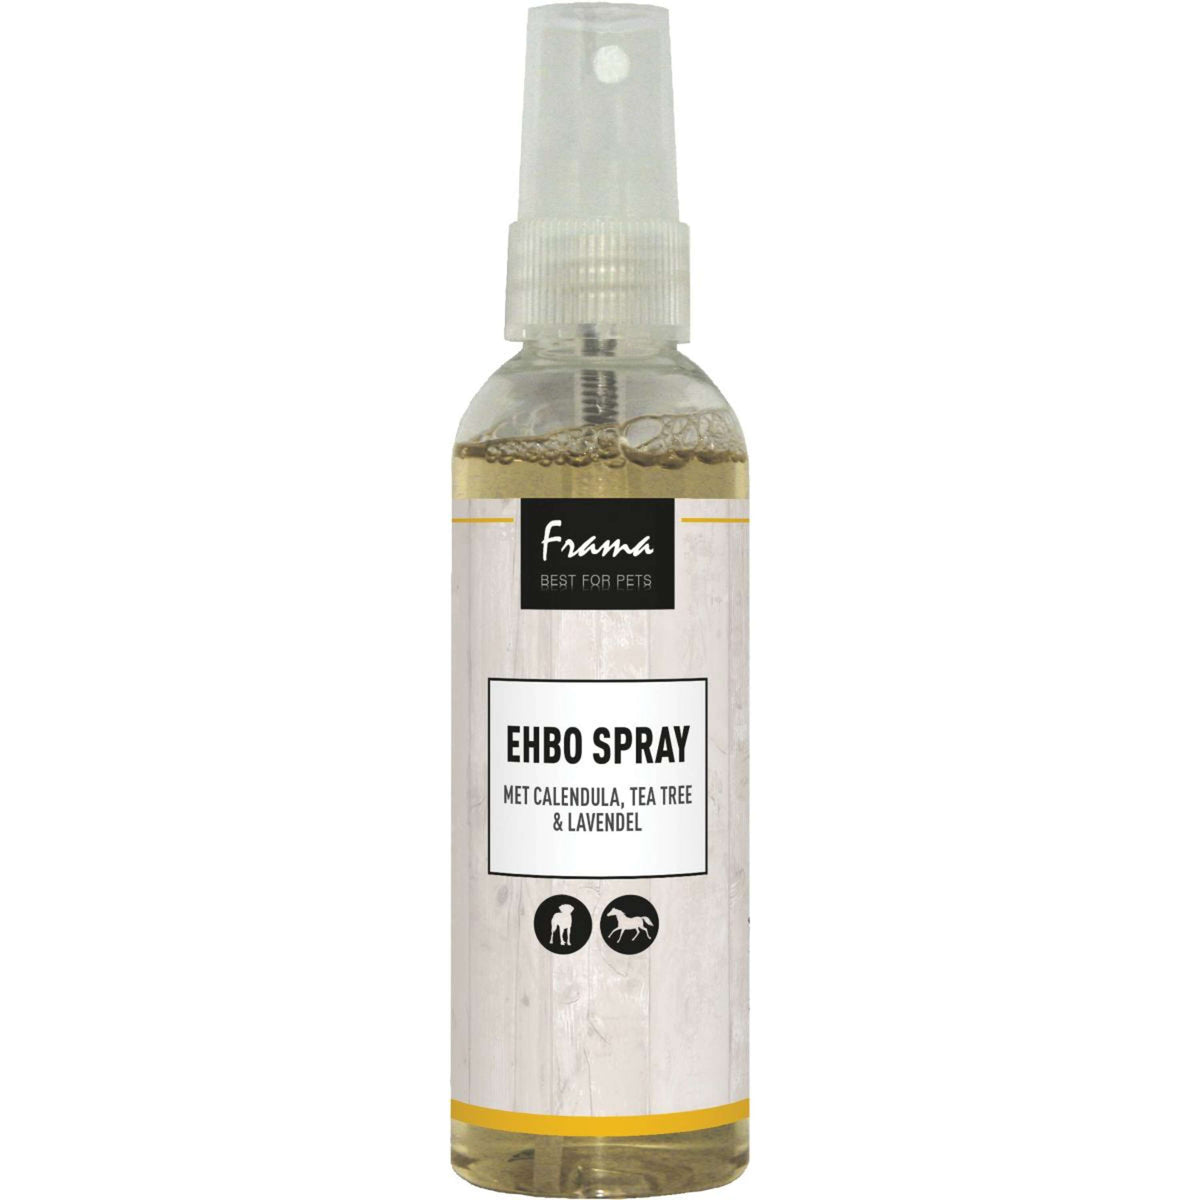 Frama Best For Pets EHBO Spray